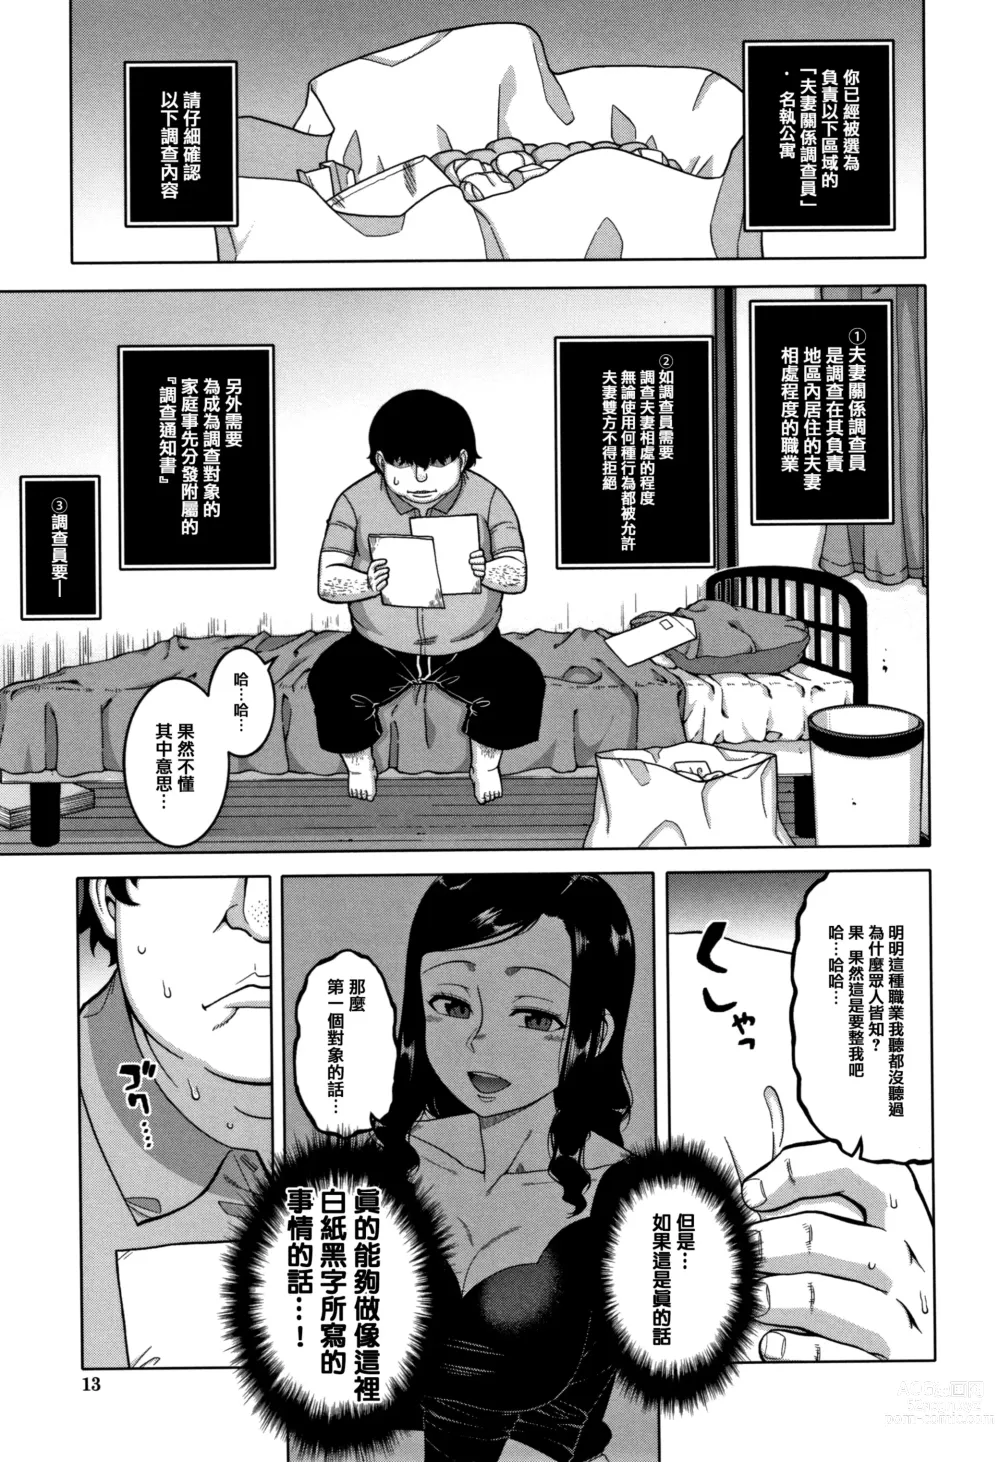 Page 15 of manga 催眠夫婦仲調査